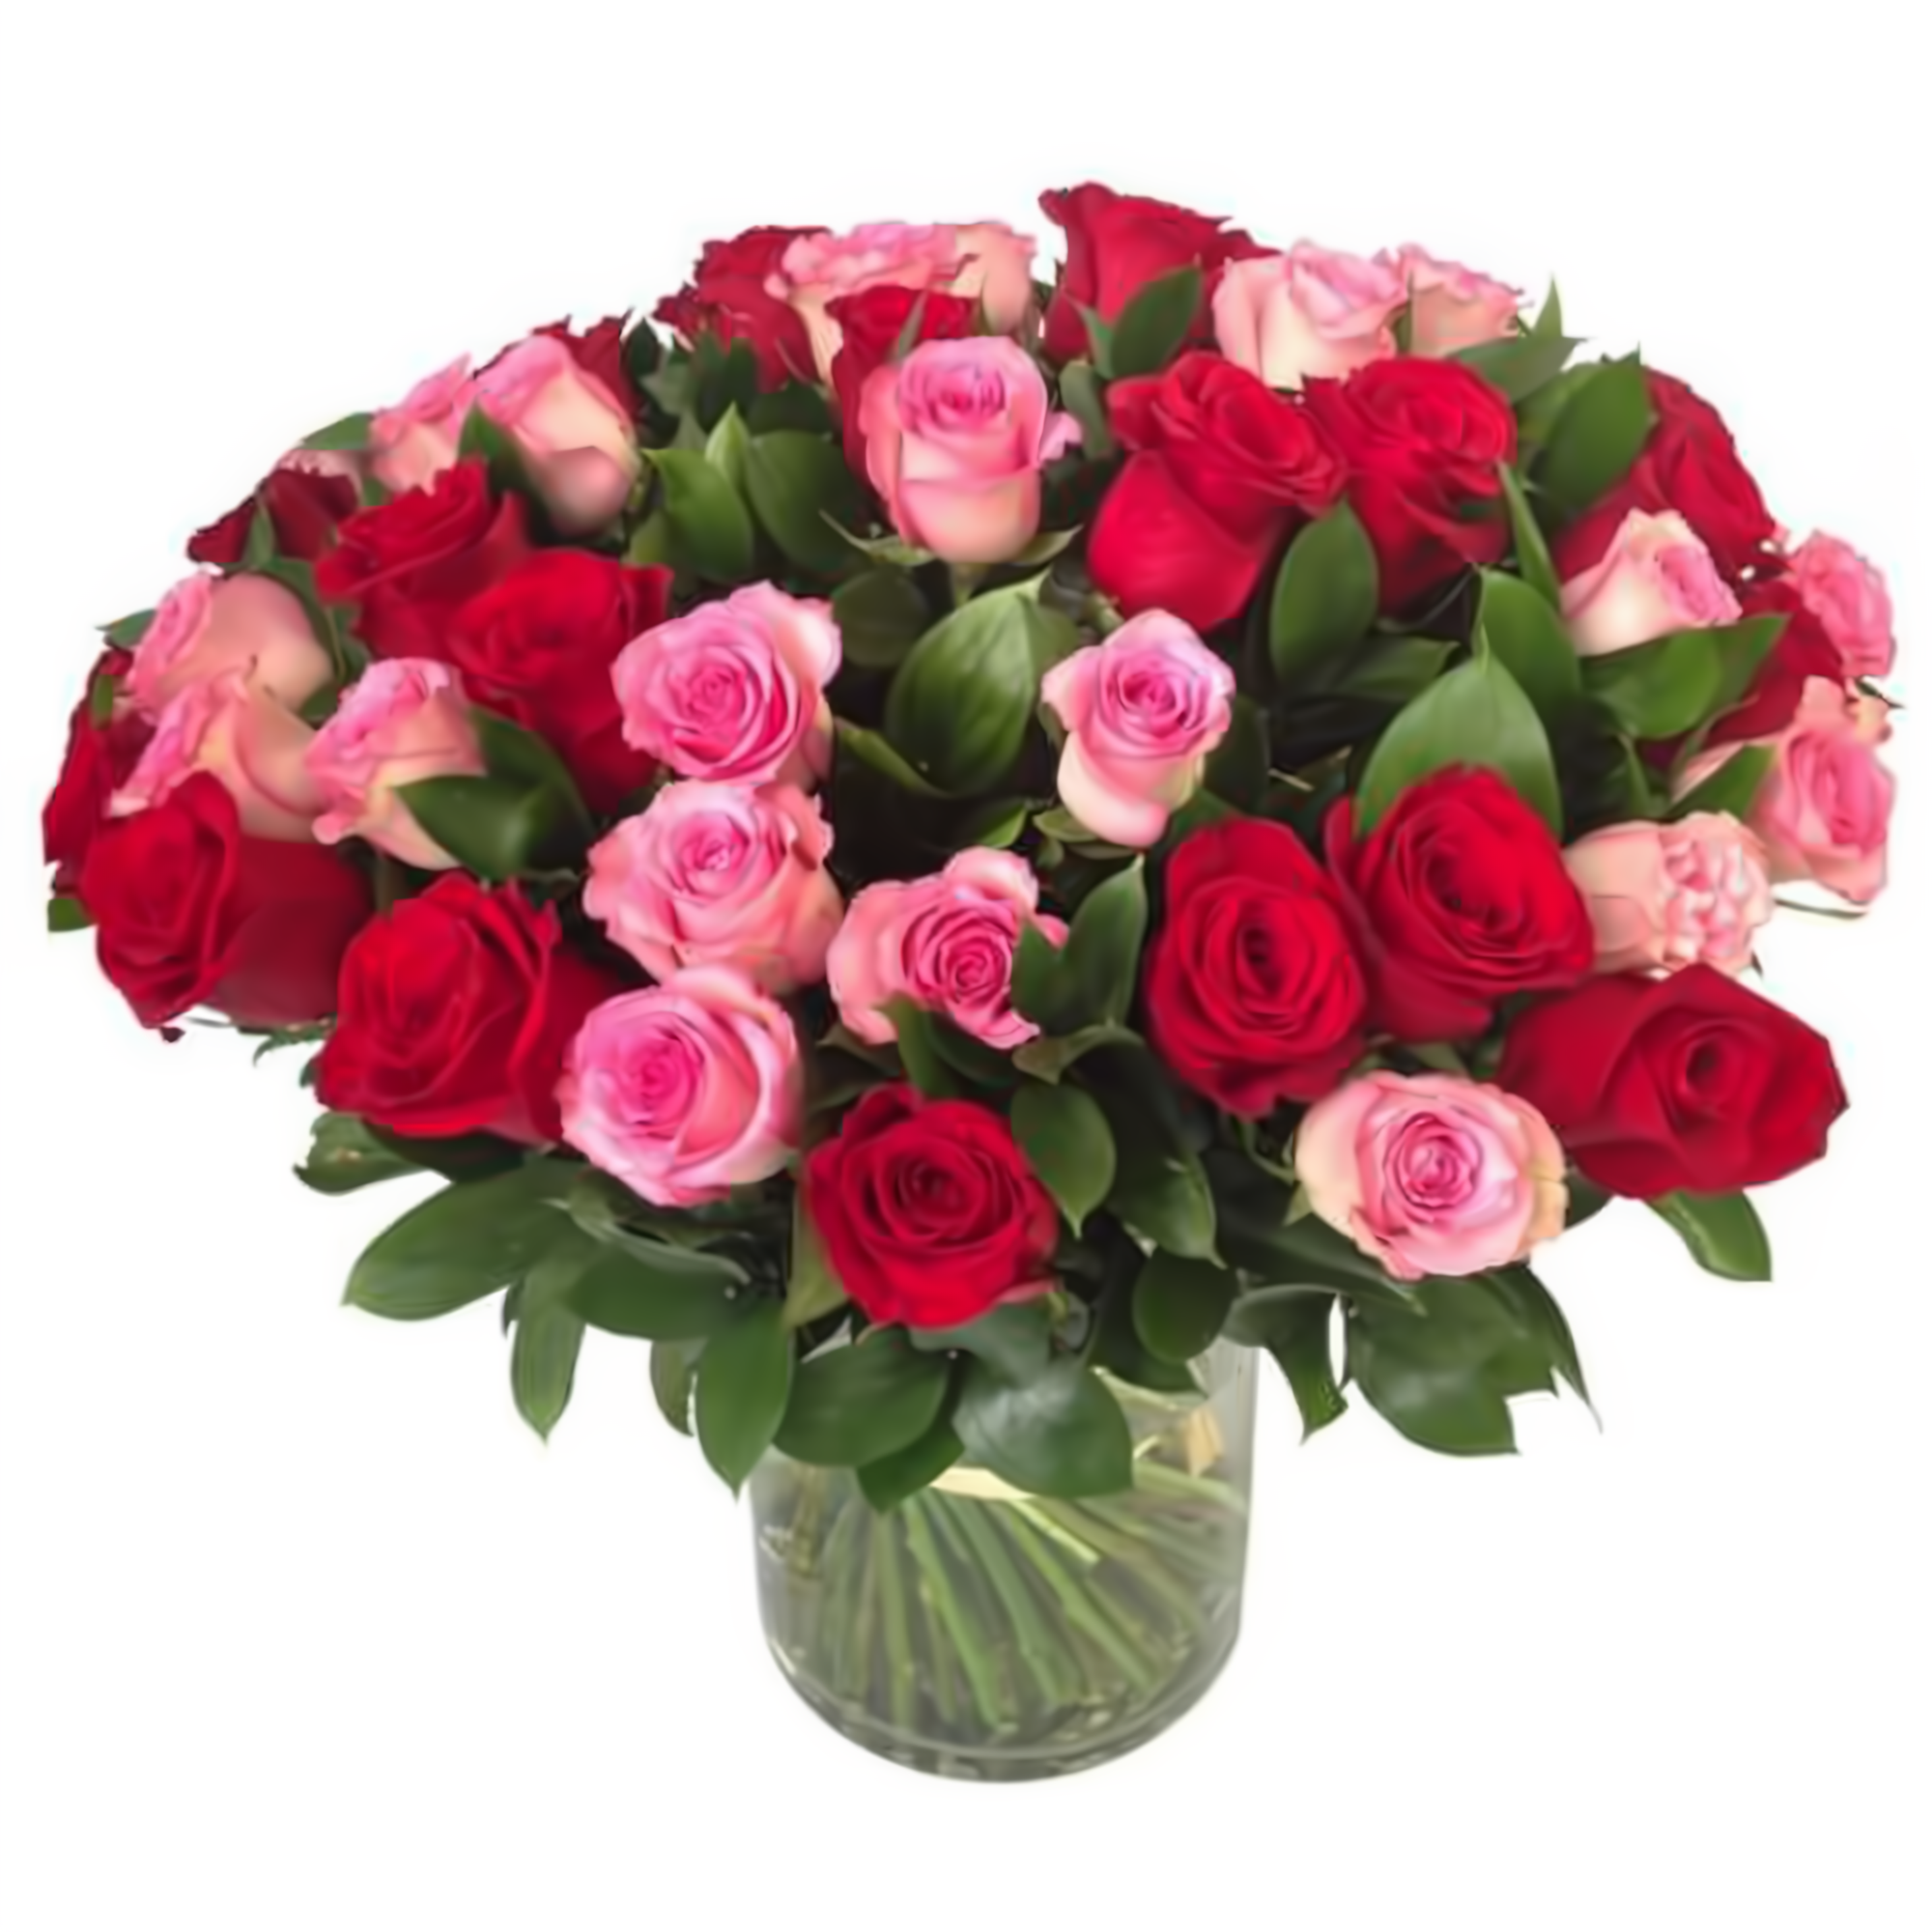 Manhattan Flower Delivery - 100 Premium Long Stem Red & Pink Rose in a Vase - Valentine's Day